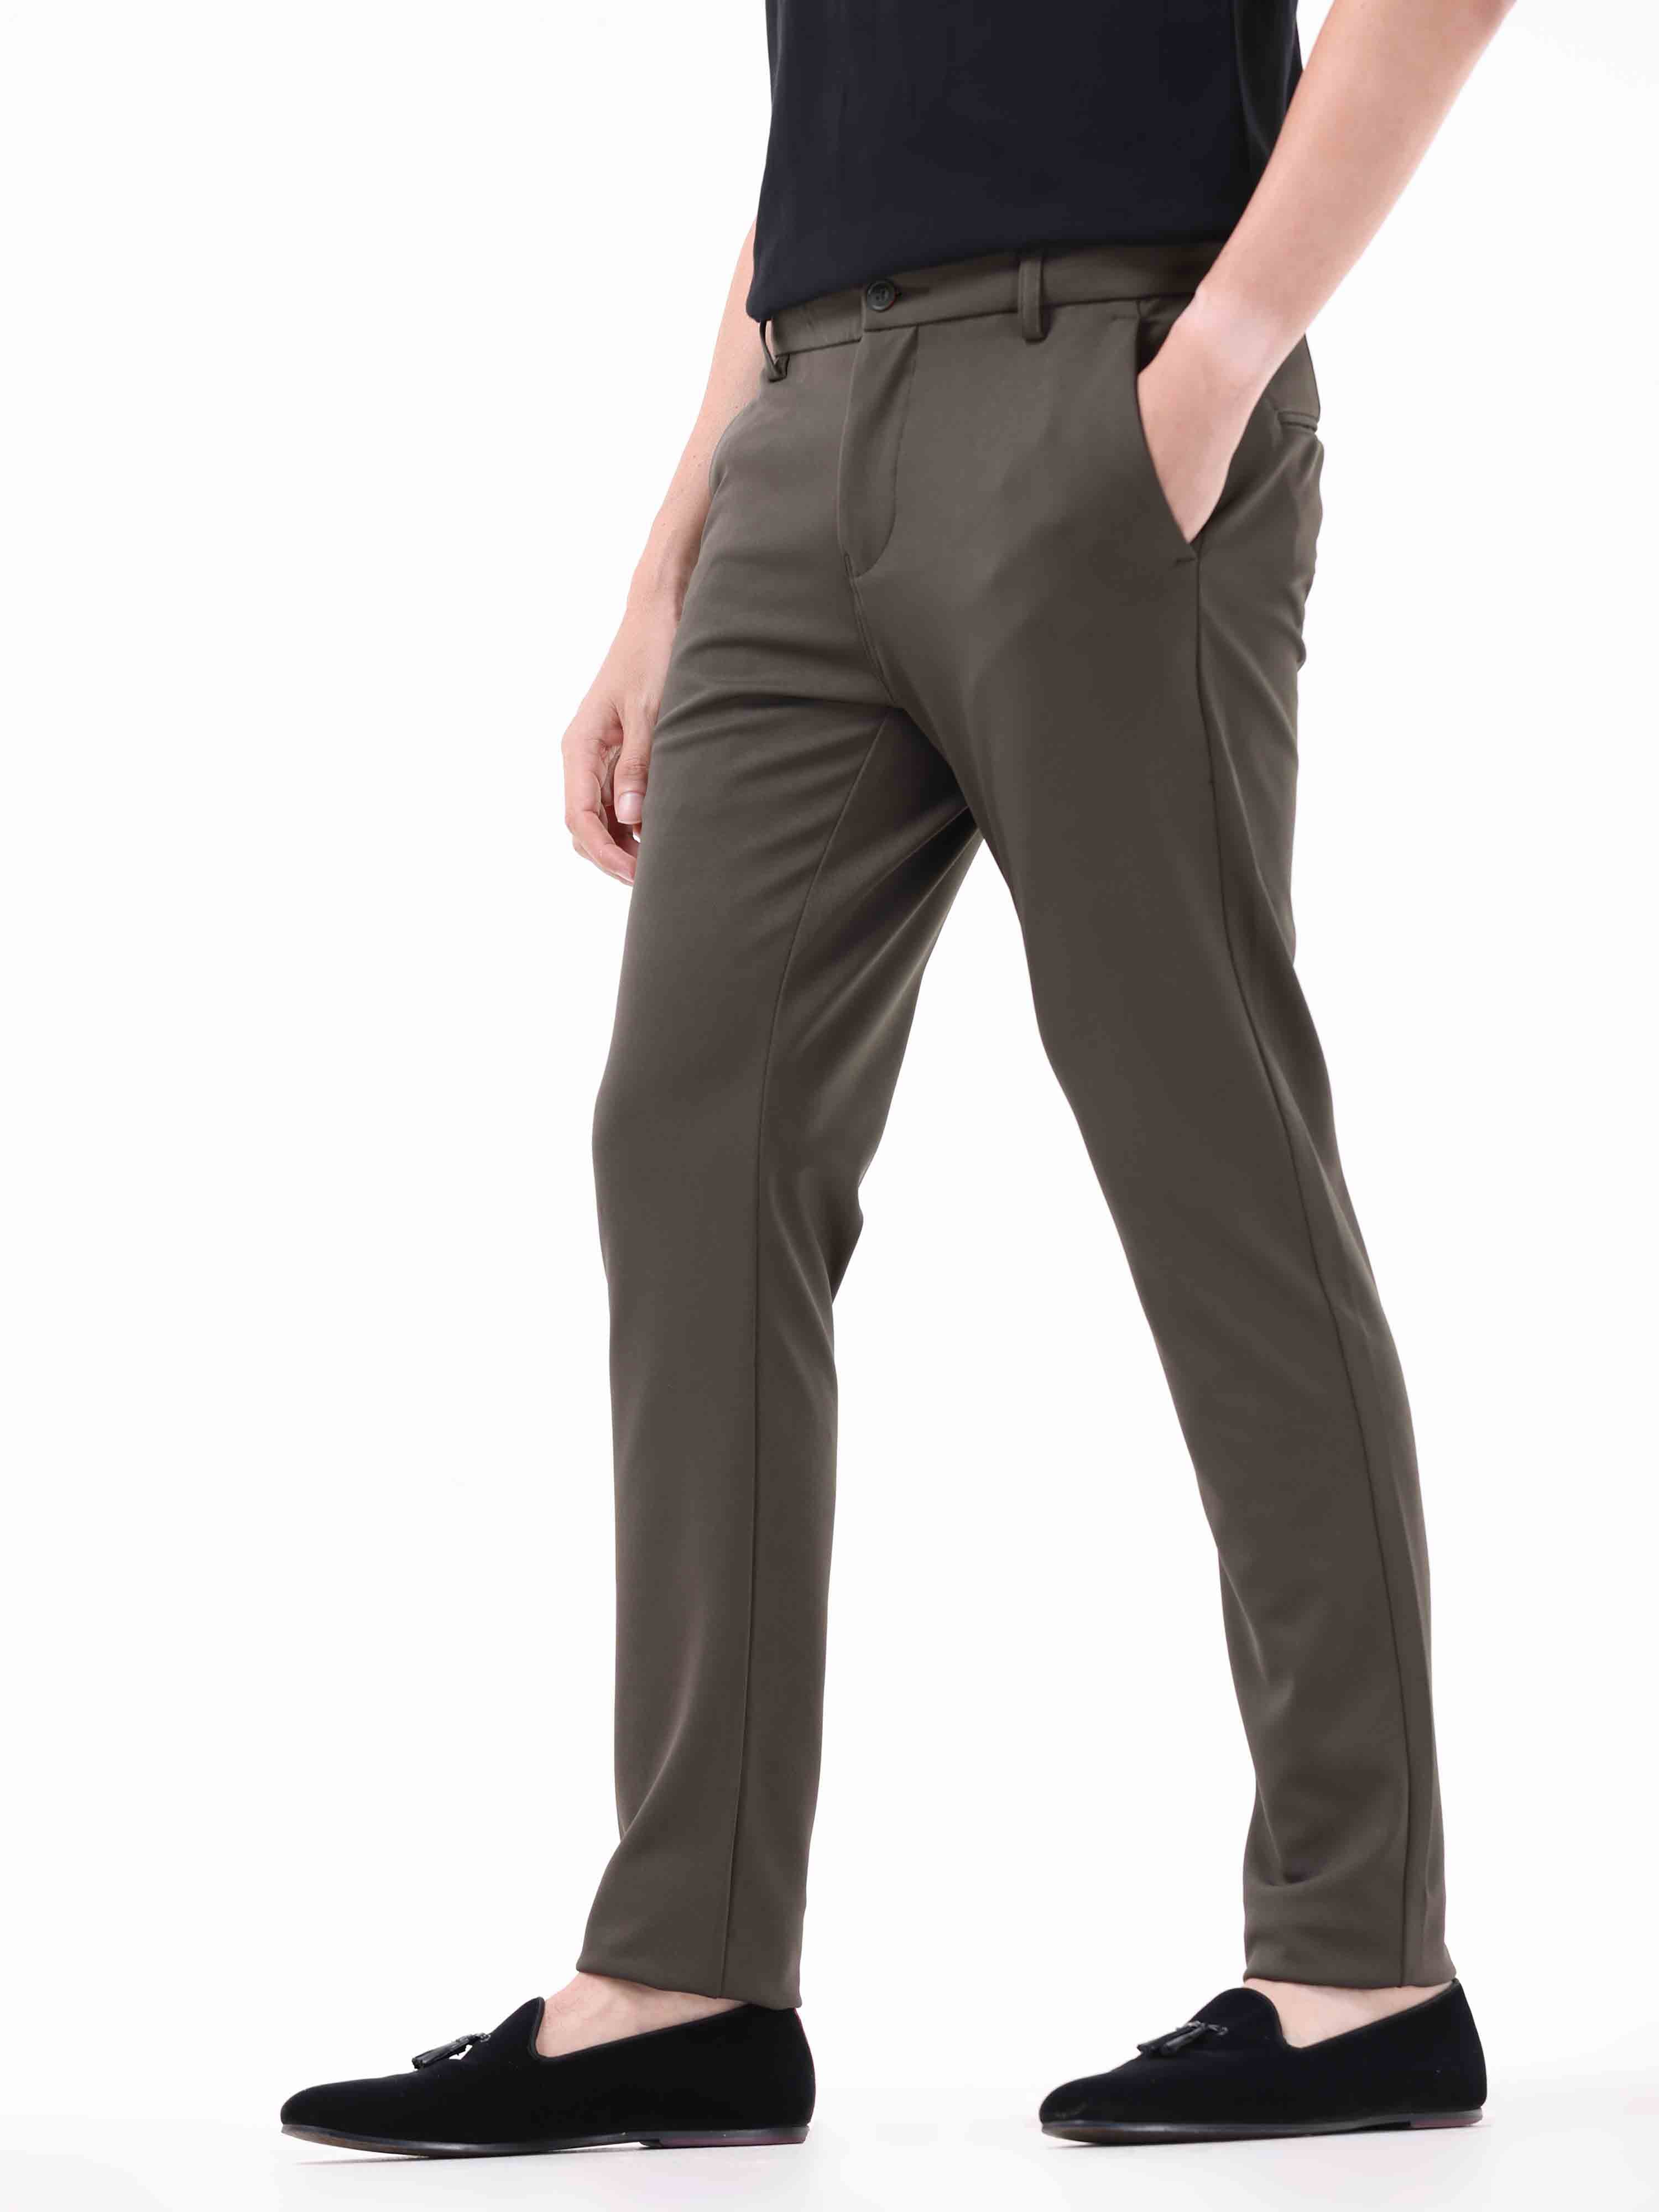 Stretch Pants - Shop Trendy Mens Stretch Pants Online